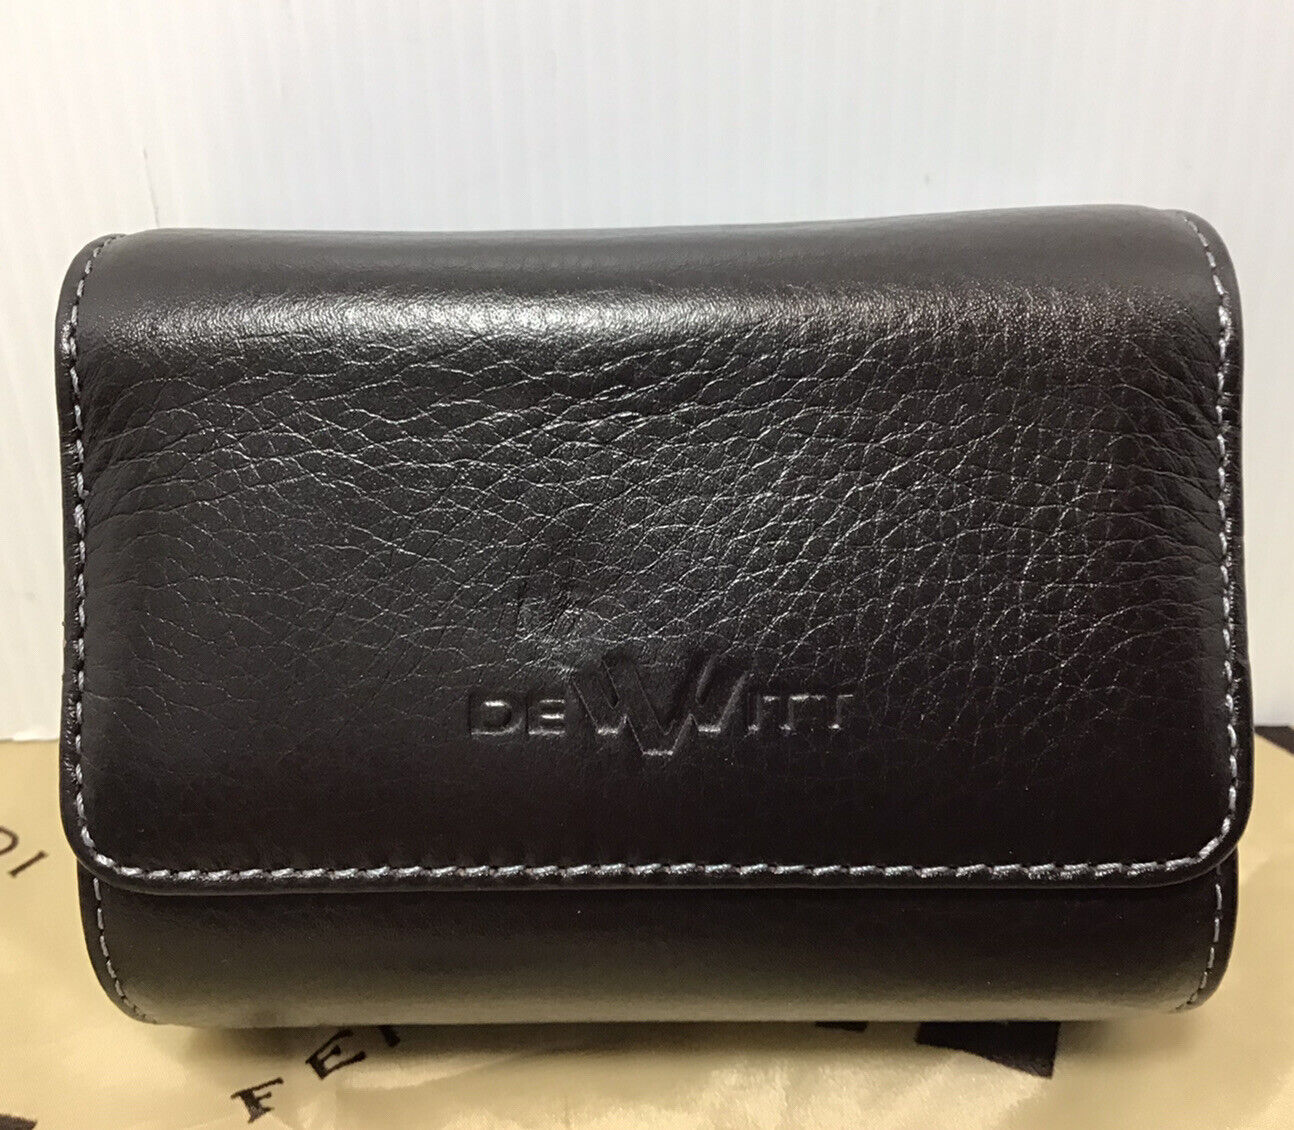 Authentic DeWitt Leather Black& Blue Watch Box  Case